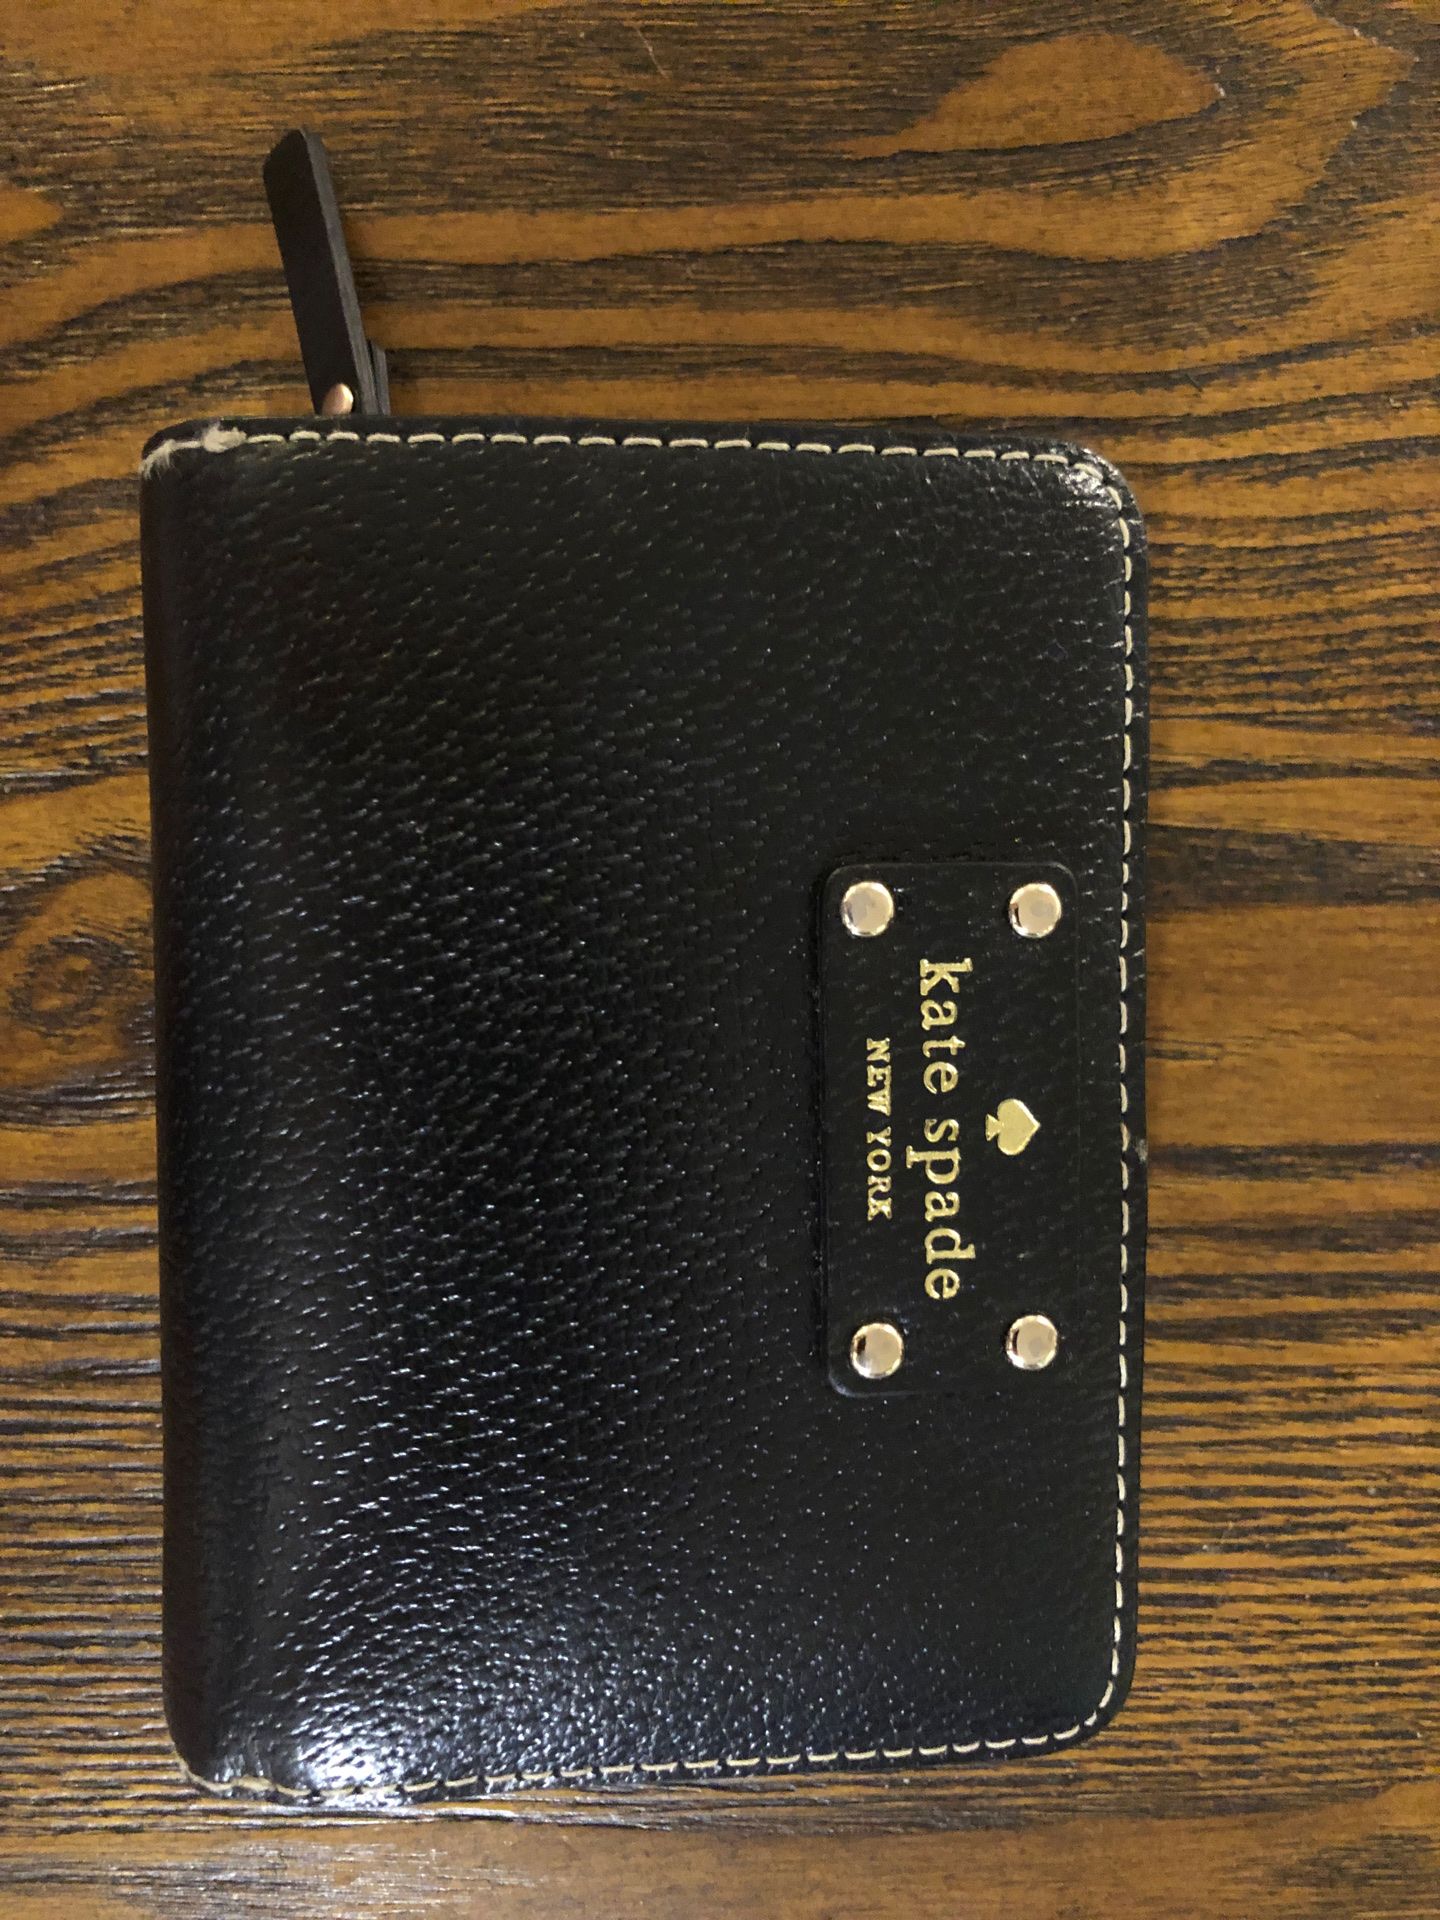 Kate spade wallet black